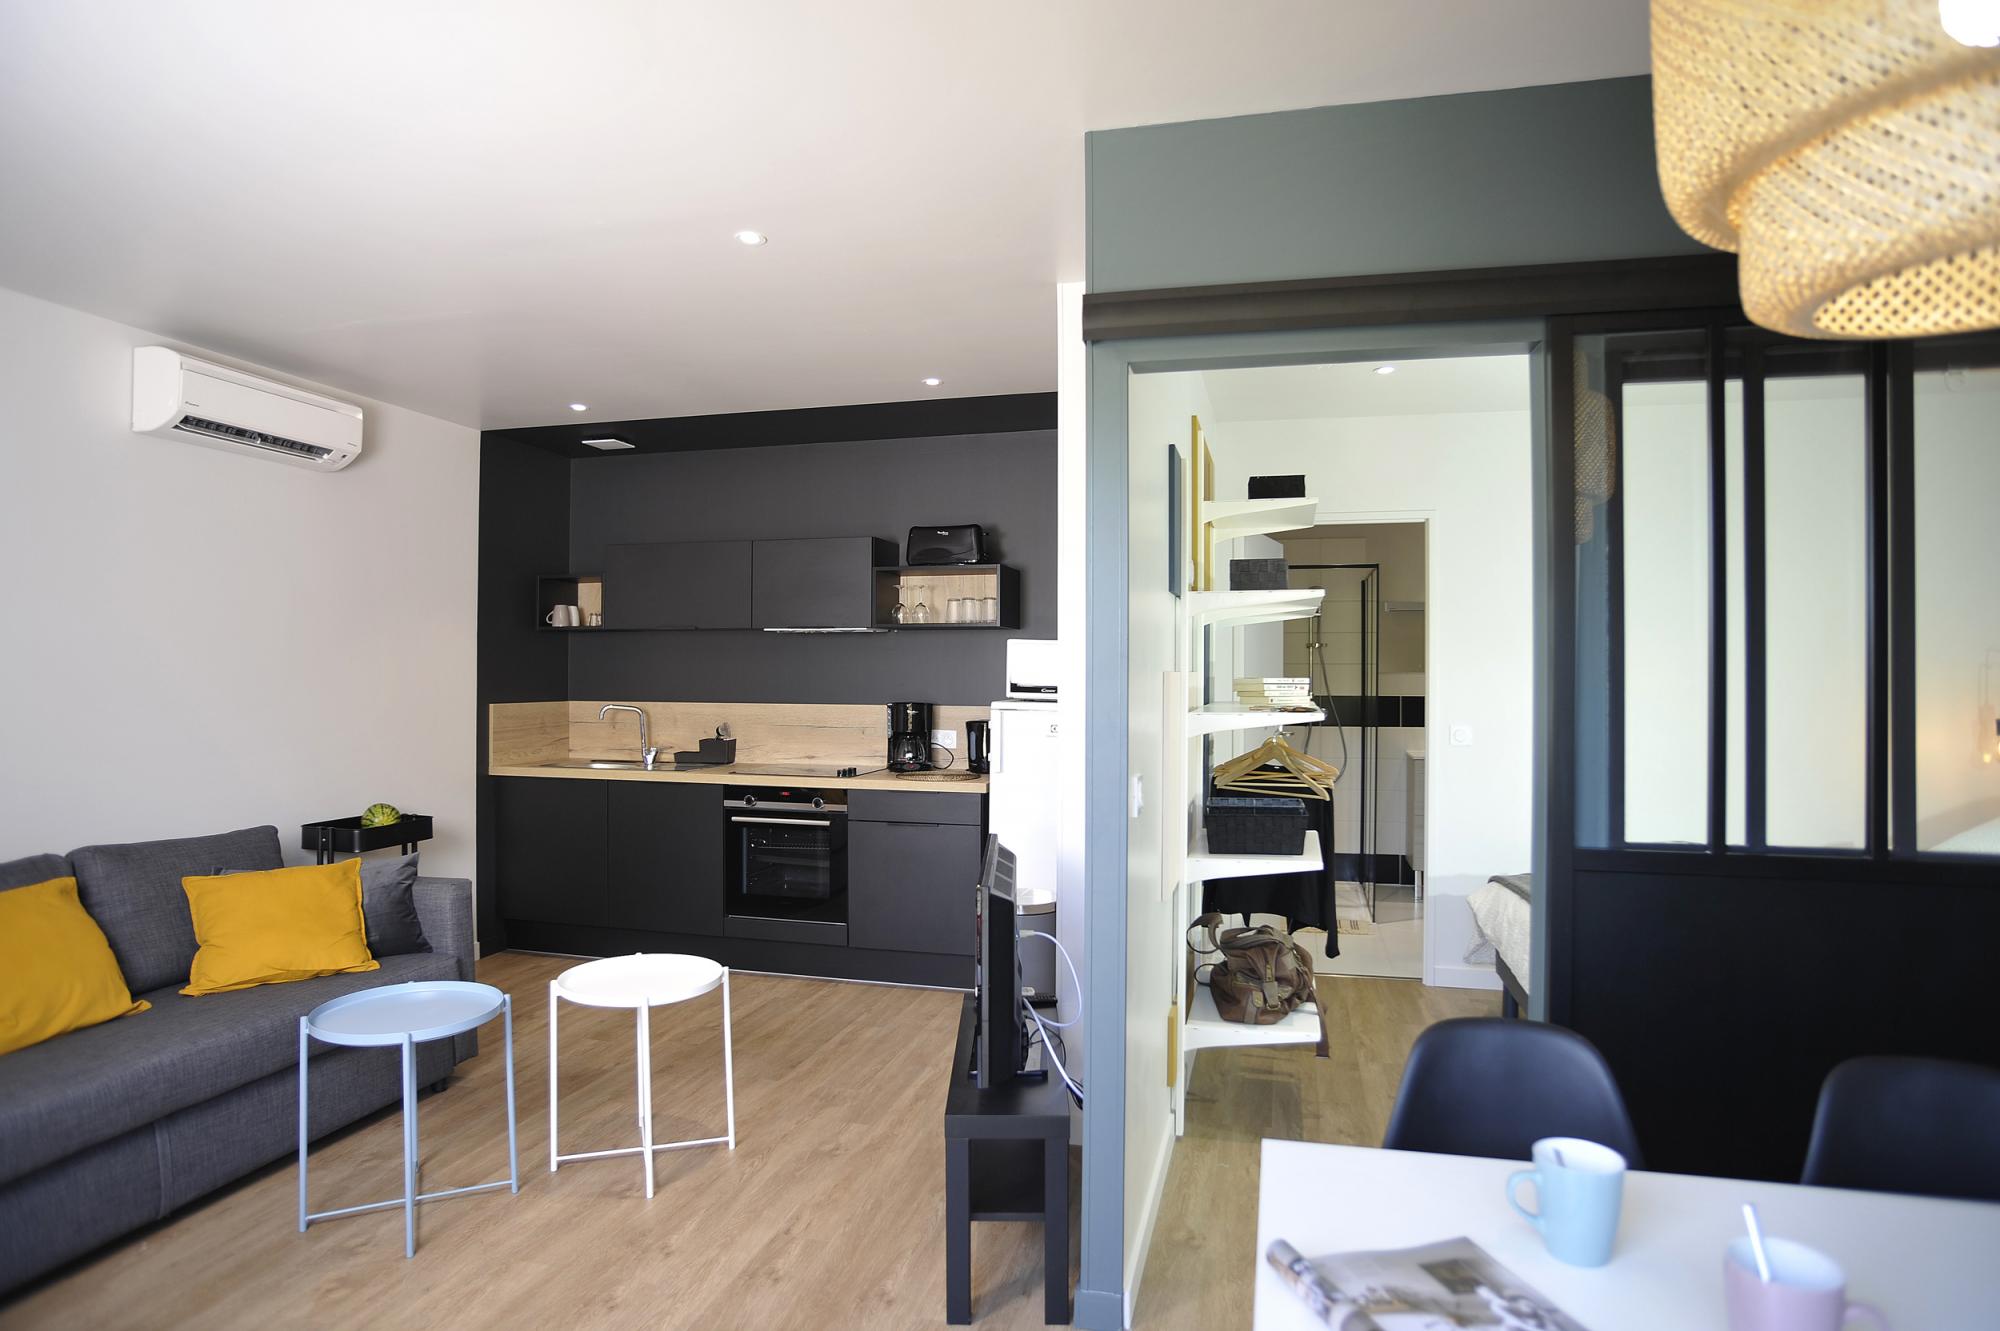 Location appartement 12 meublé avec terrasse à Jonzac (Charente Maritime 17) 